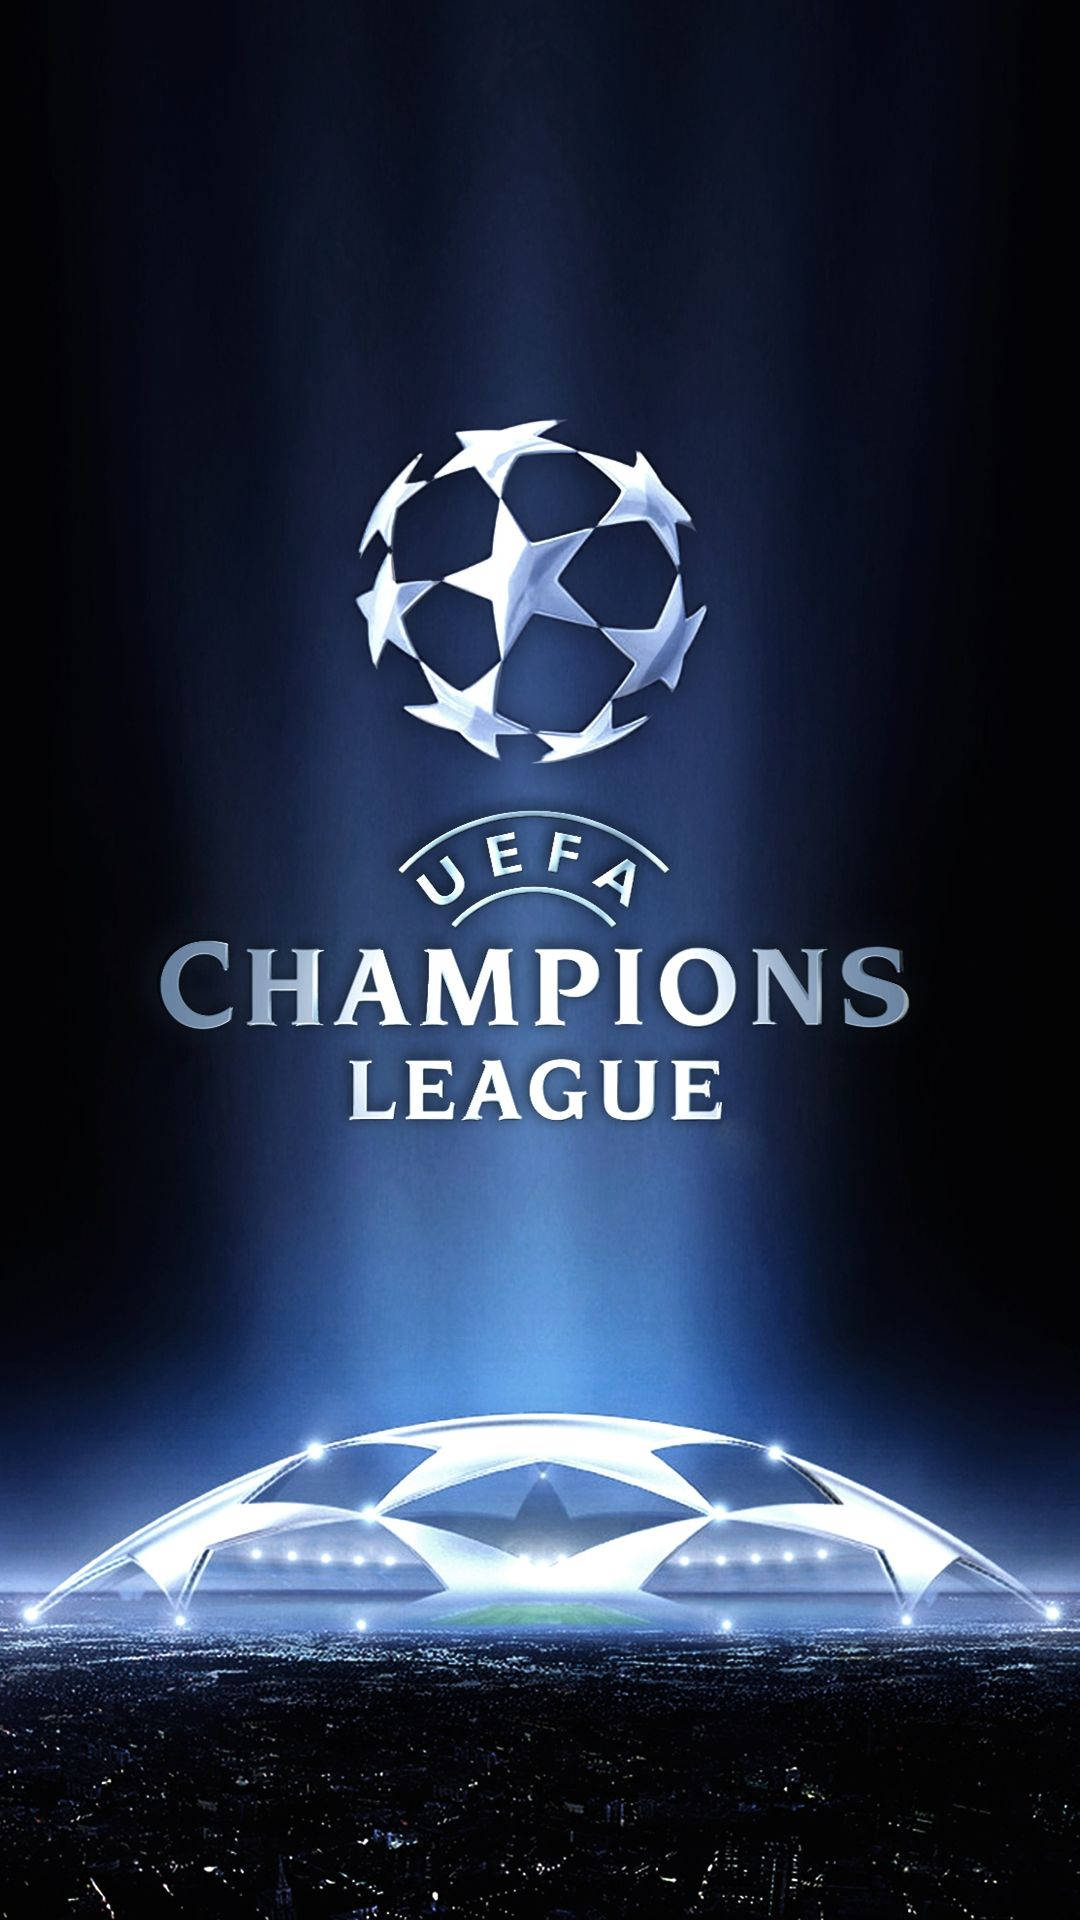 Championsleague-logotyp Över Stadion. Wallpaper